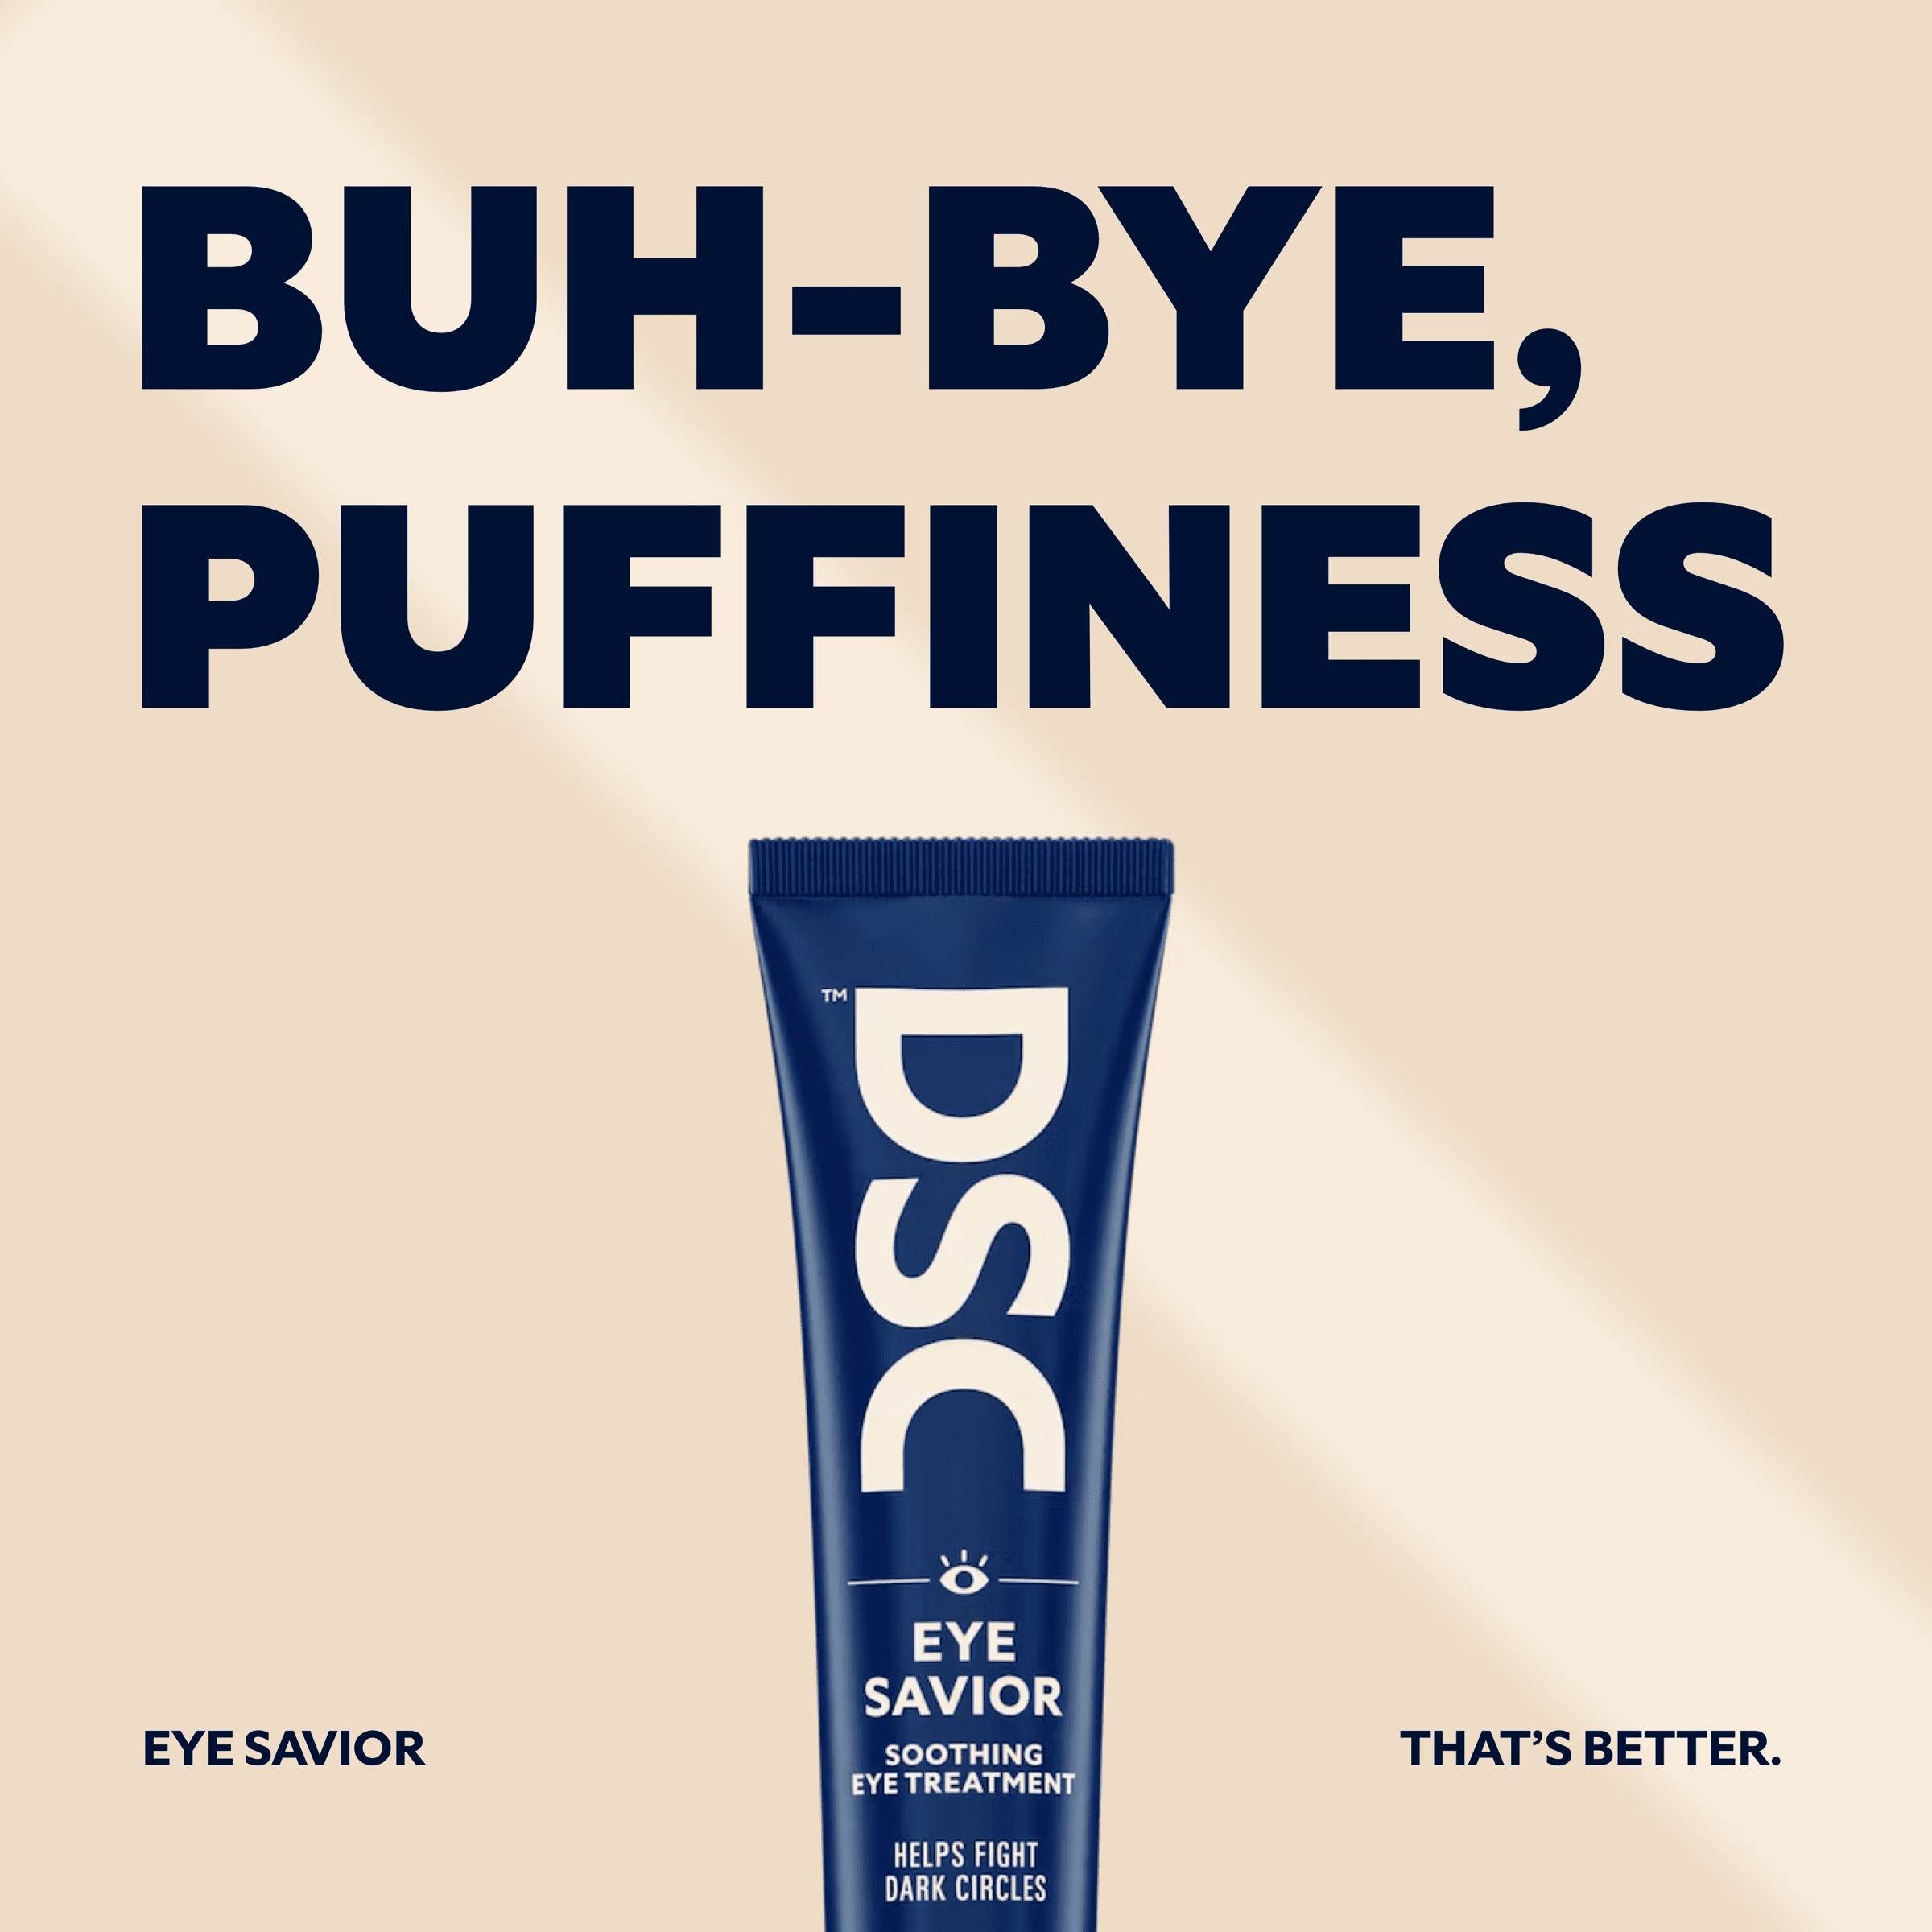 Dollar Shave Club Eye Savior reduces puffiness.